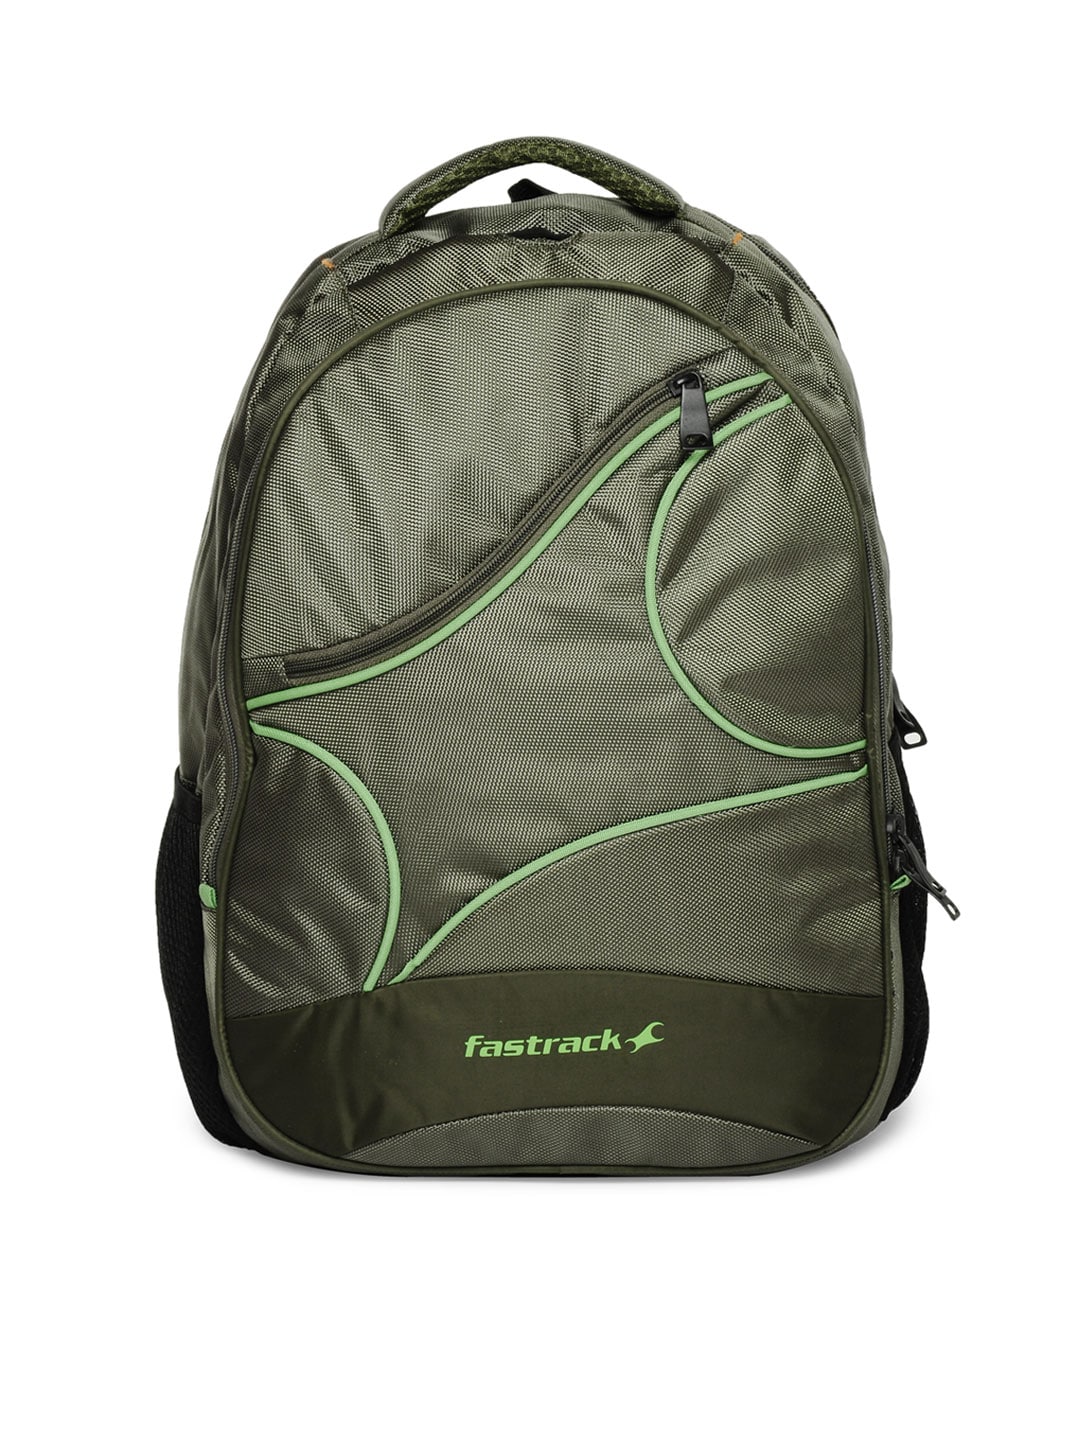 Fastrack Unisex Green Backpack